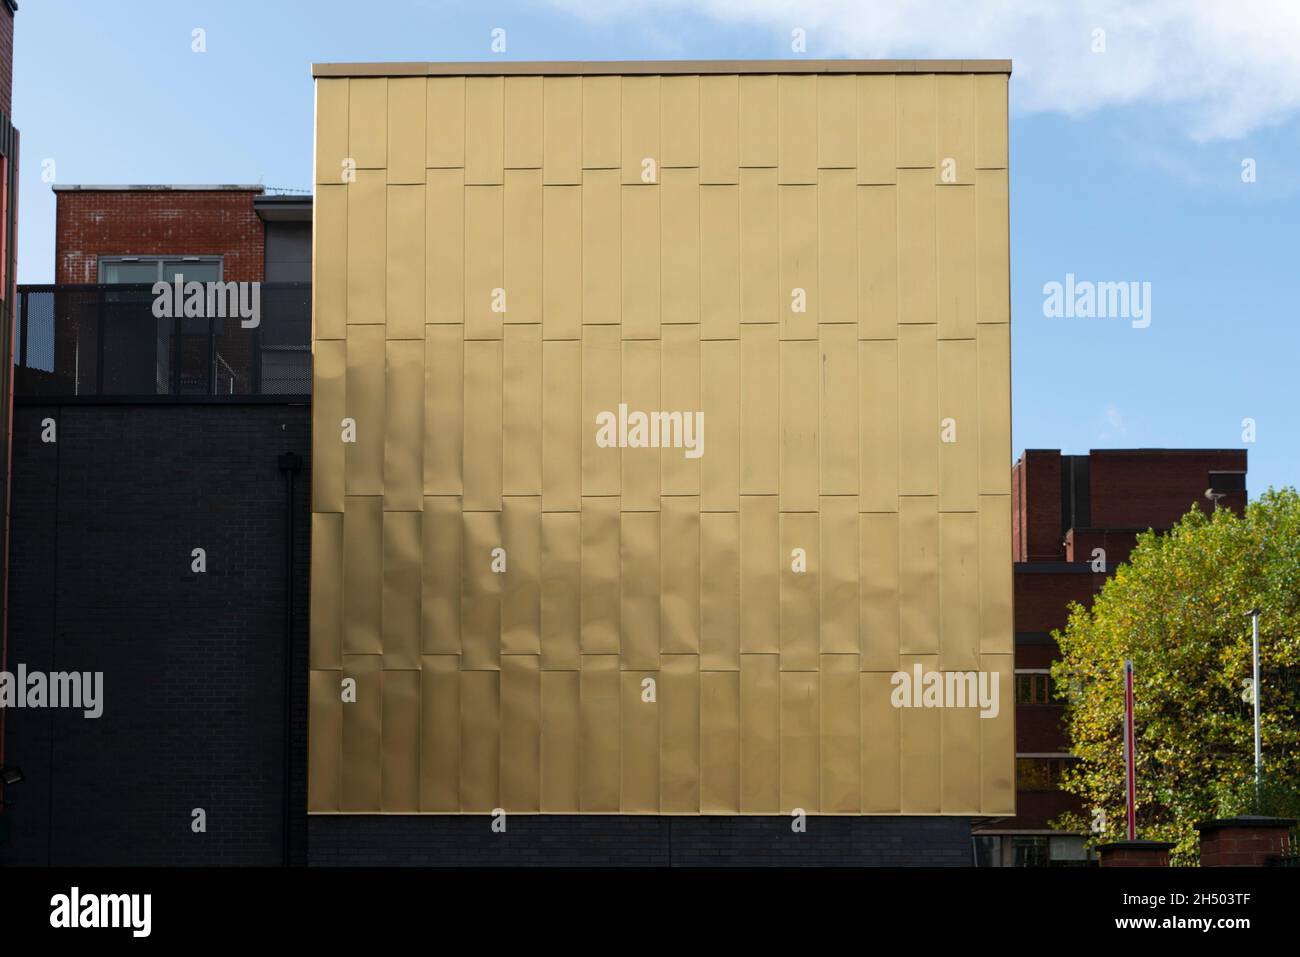 Manchester Architecture Stock Photo